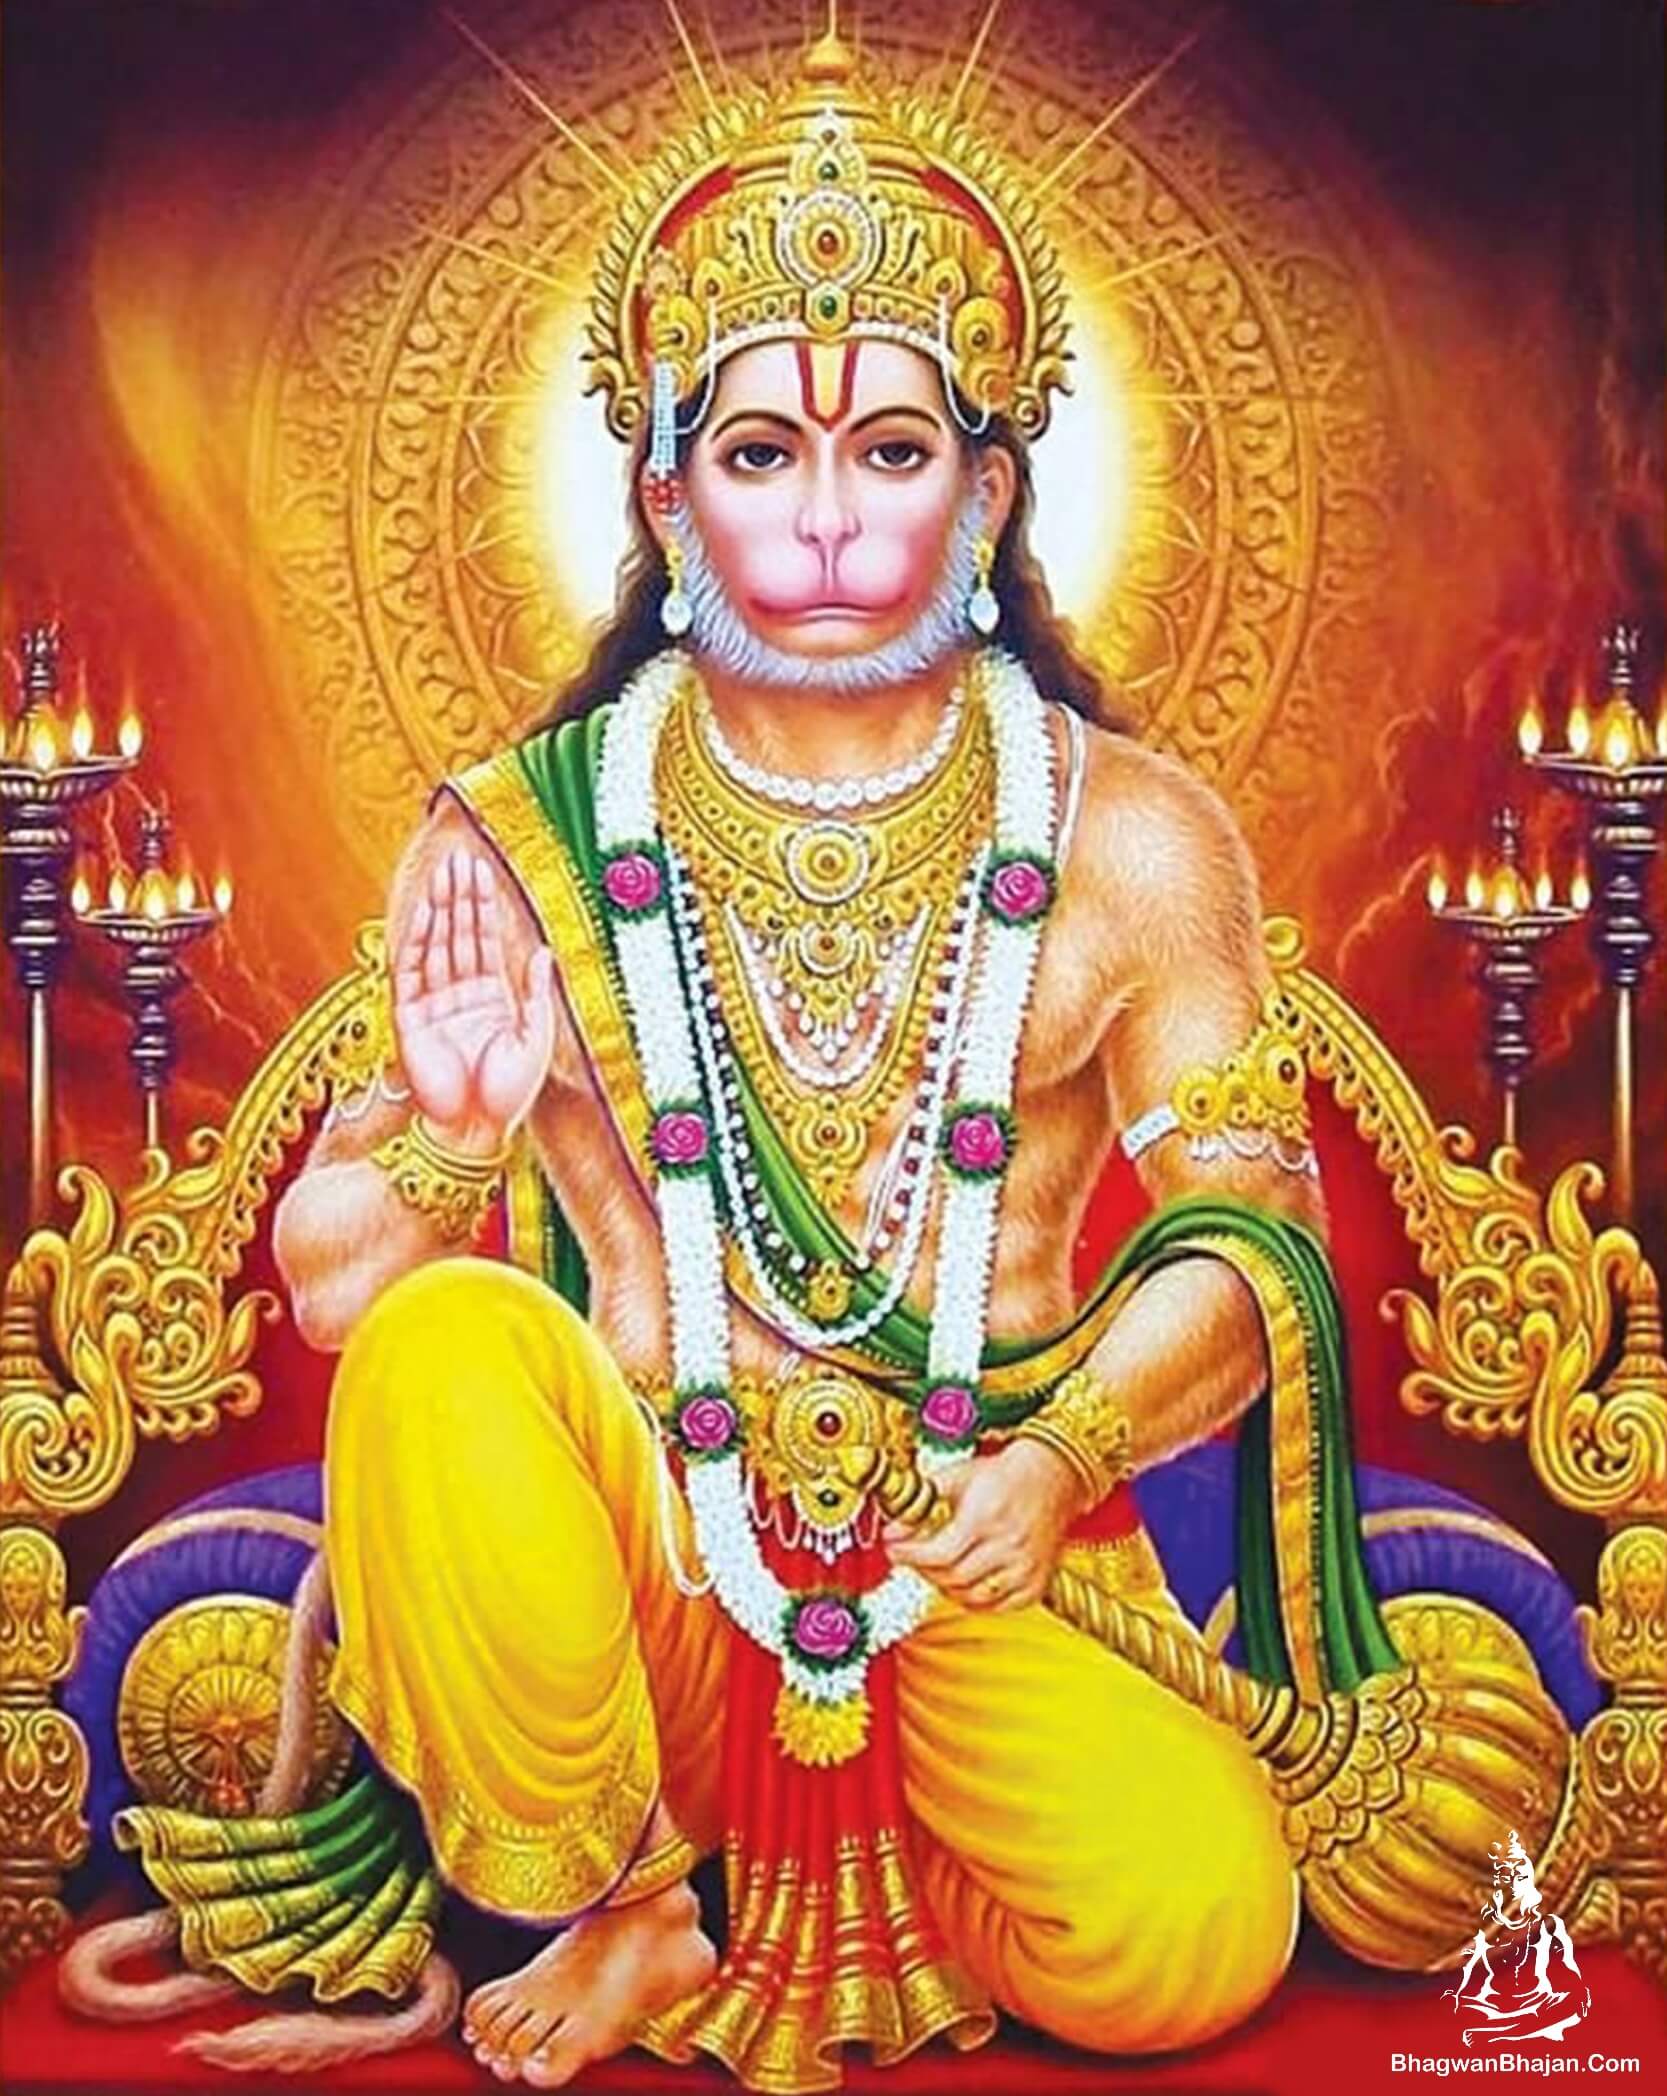 Download Free HD Wallpaper of Bhagwan Shree Hanuman. Bajrangbali HD Image. Sankatmochan Hanuman Wallpaper & Image